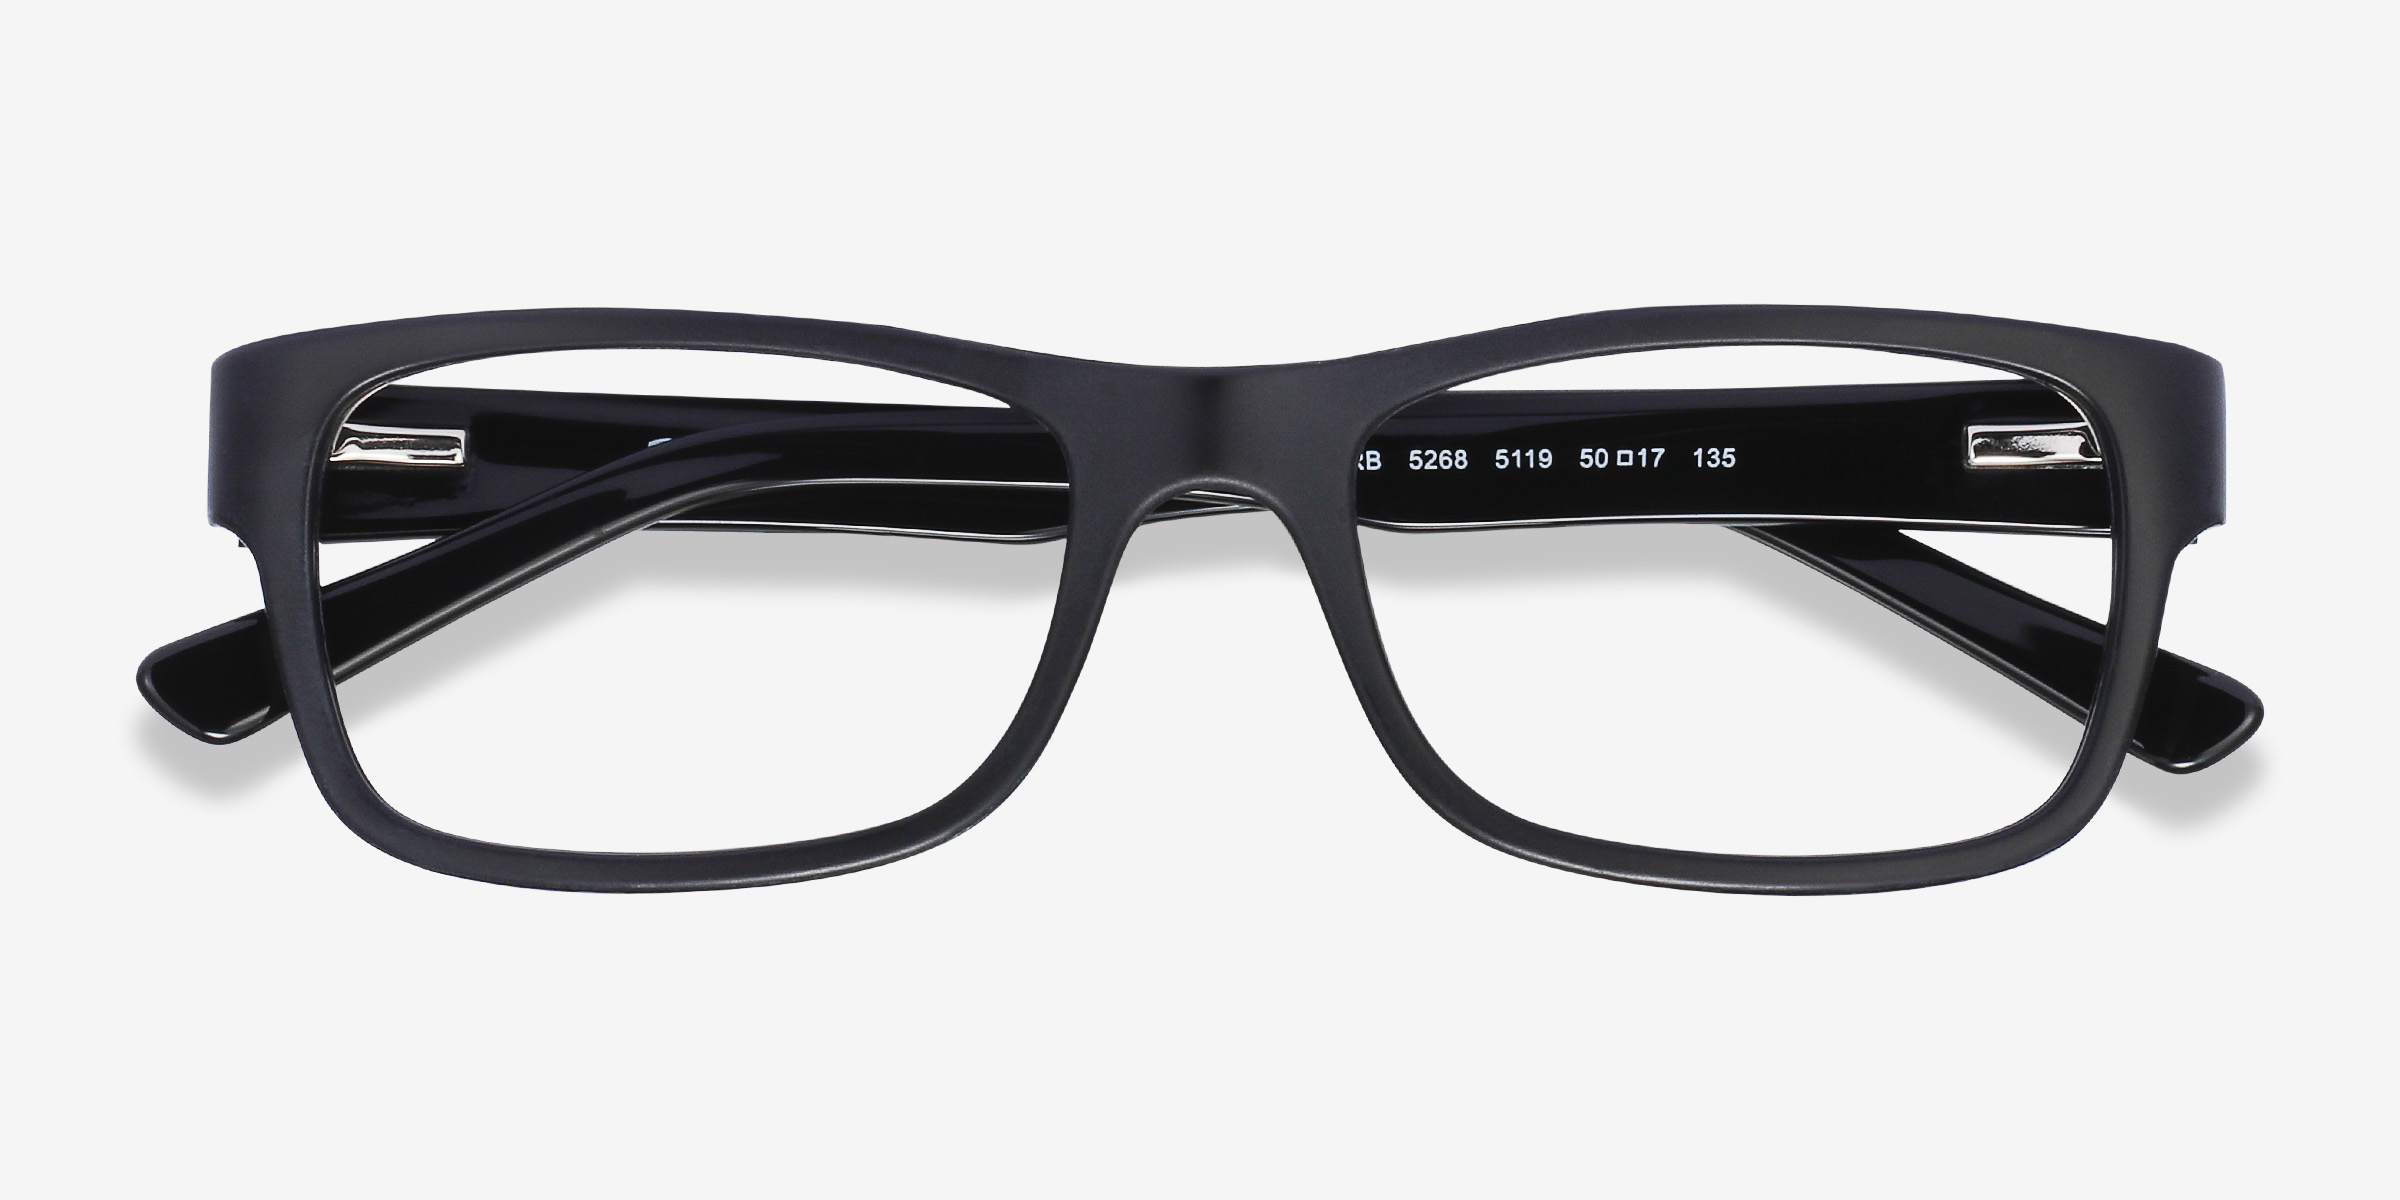 Ray-Ban RB5268 - Rectangle Matte Black Frame Eyeglasses | Eyebuydirect